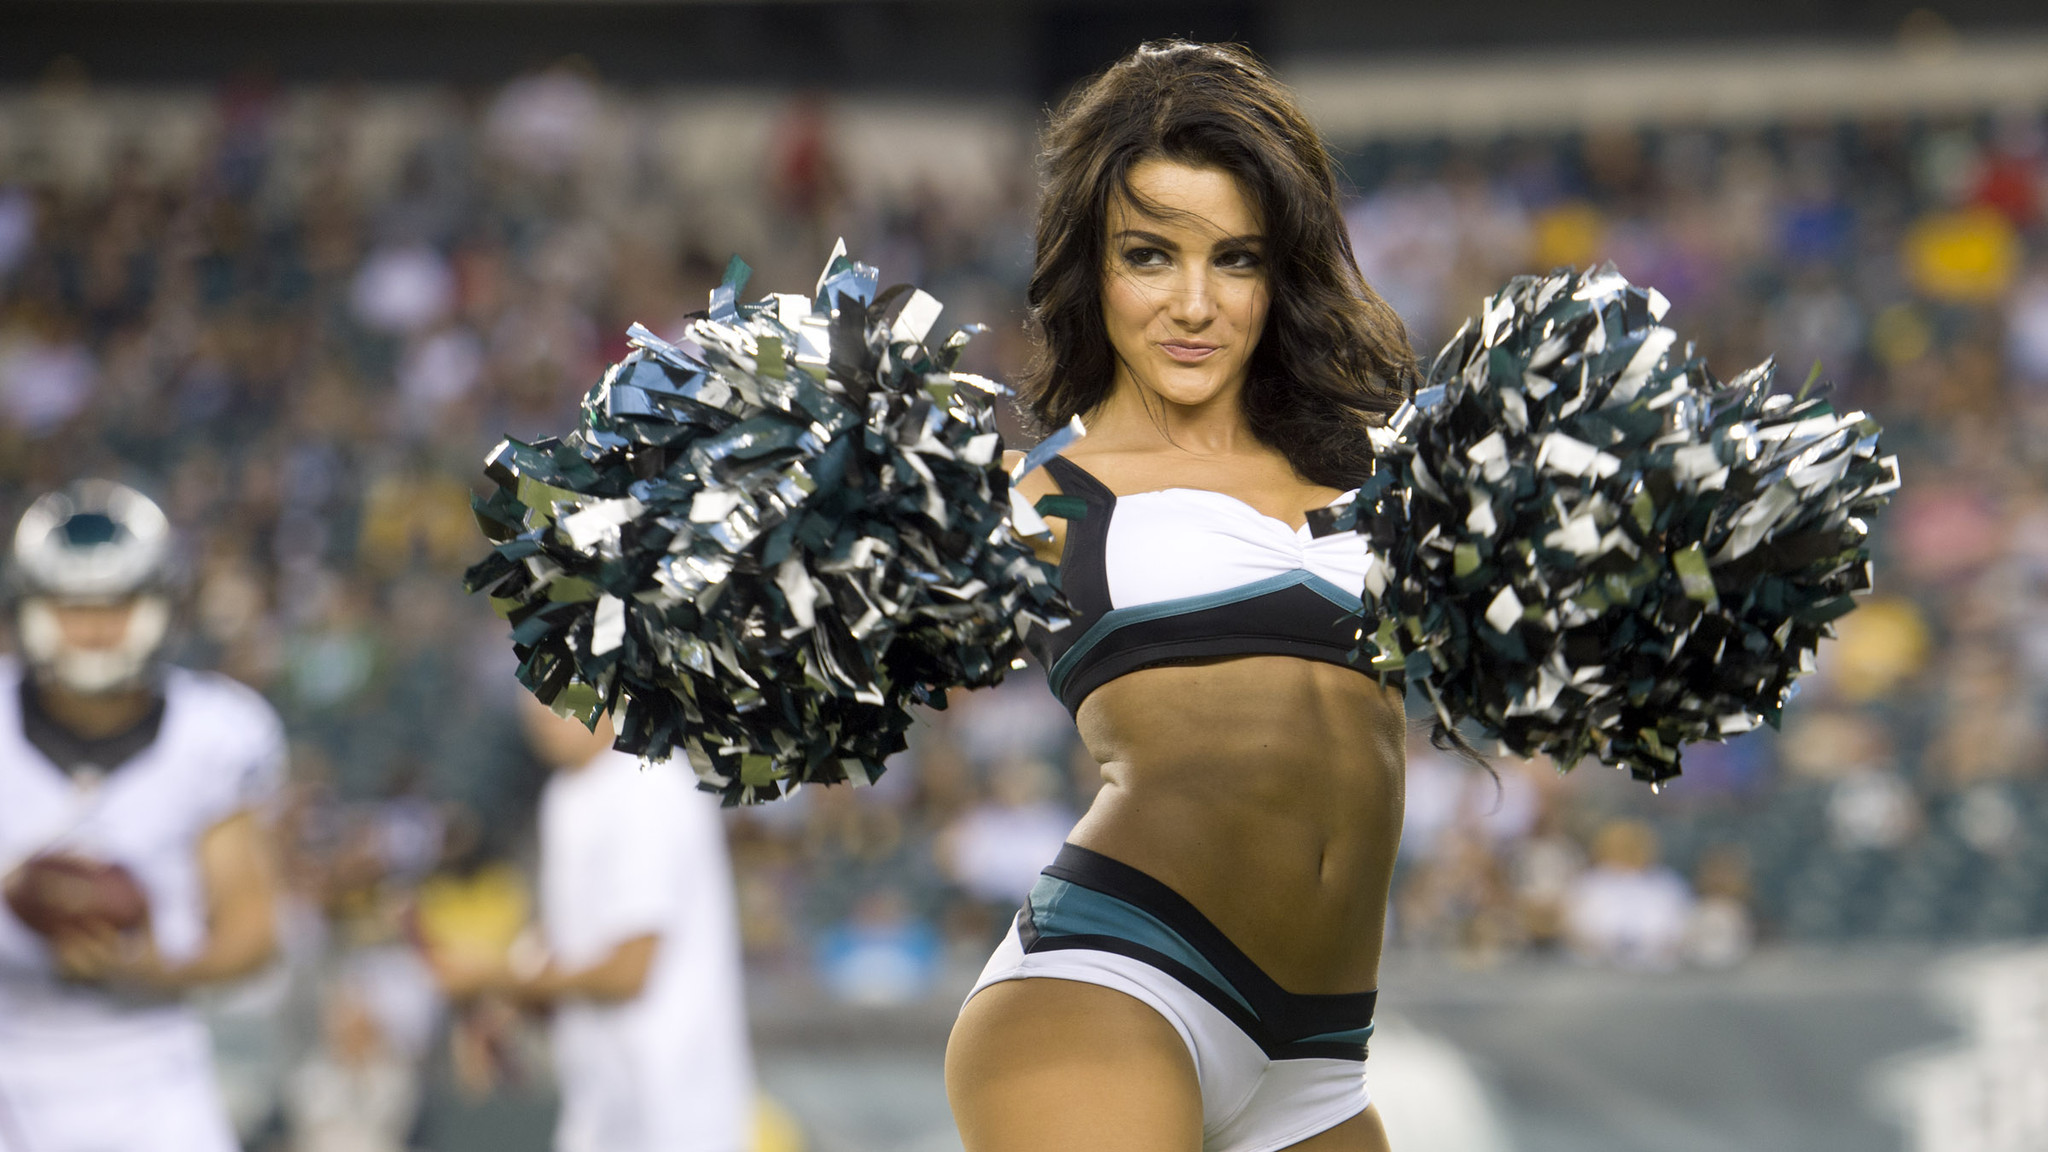 PICTURES: 2014 Philadelphia Eagles Cheerleaders - The 